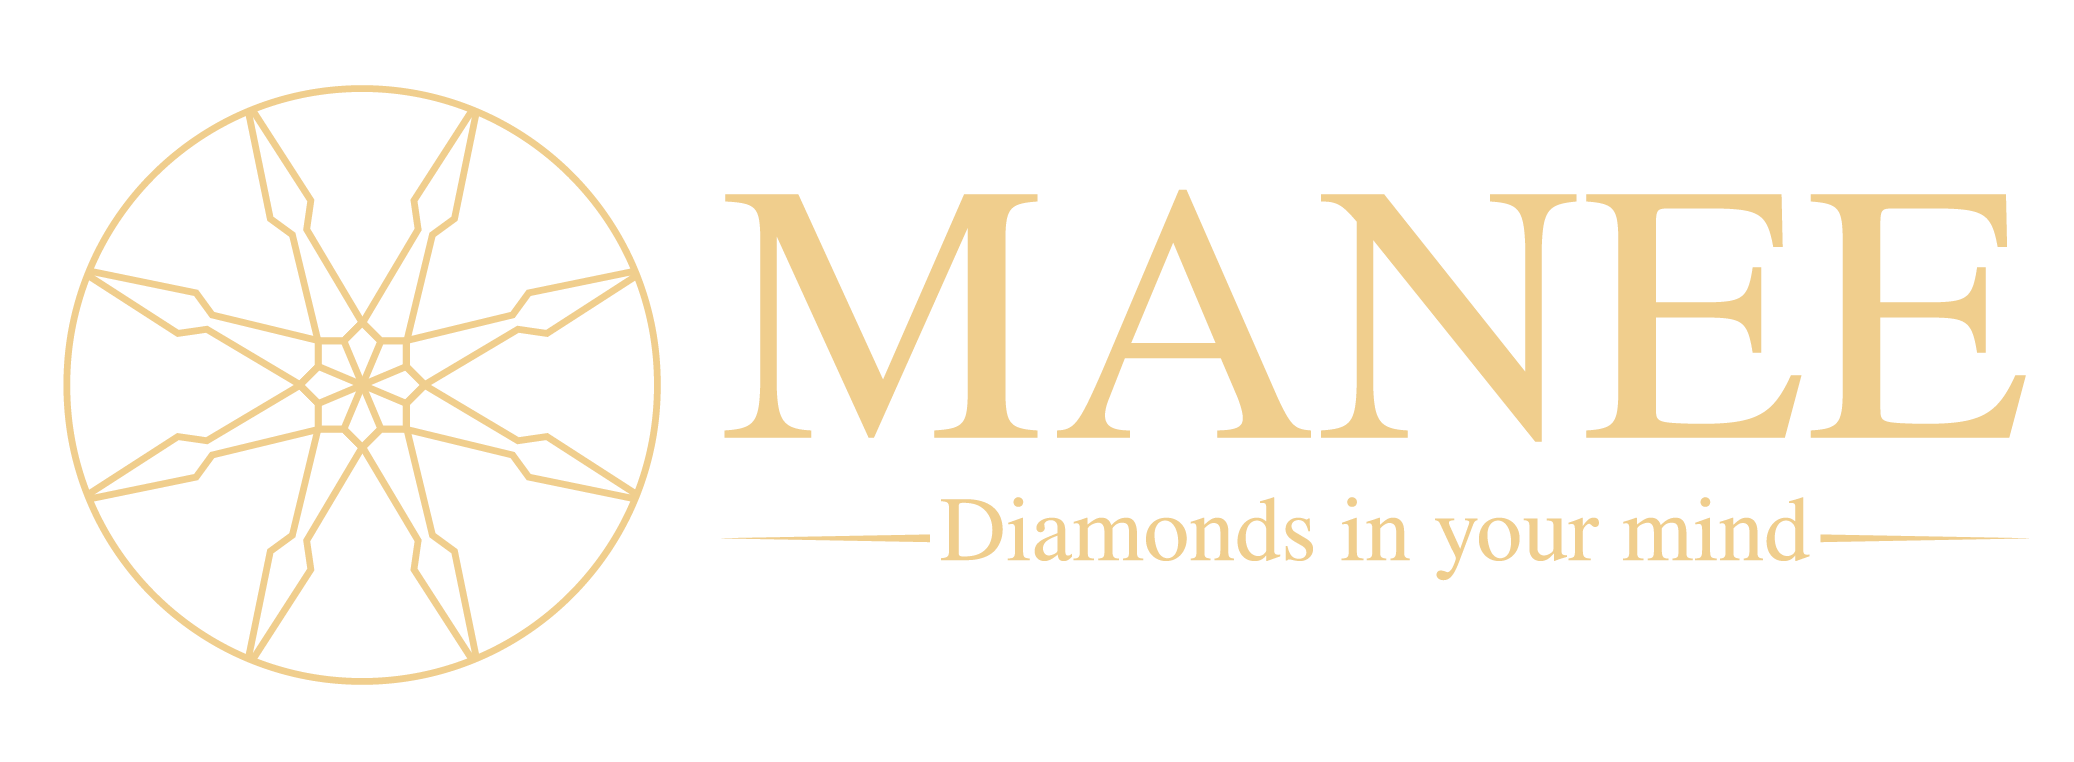 Diamonds By Manee - Buy Diamonds Online